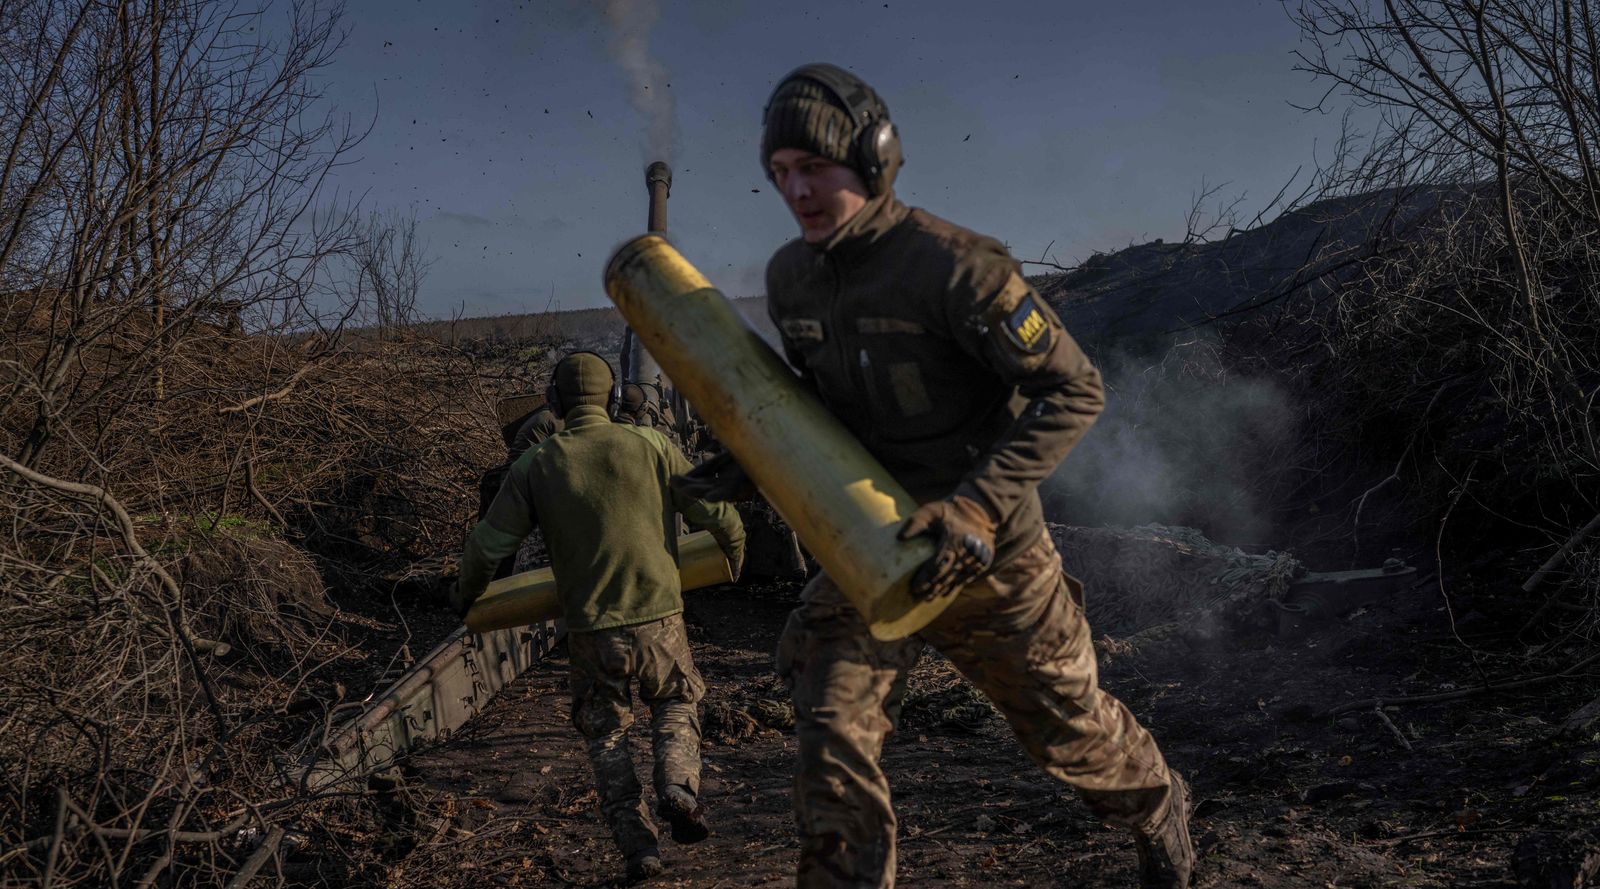 ukraine shelling